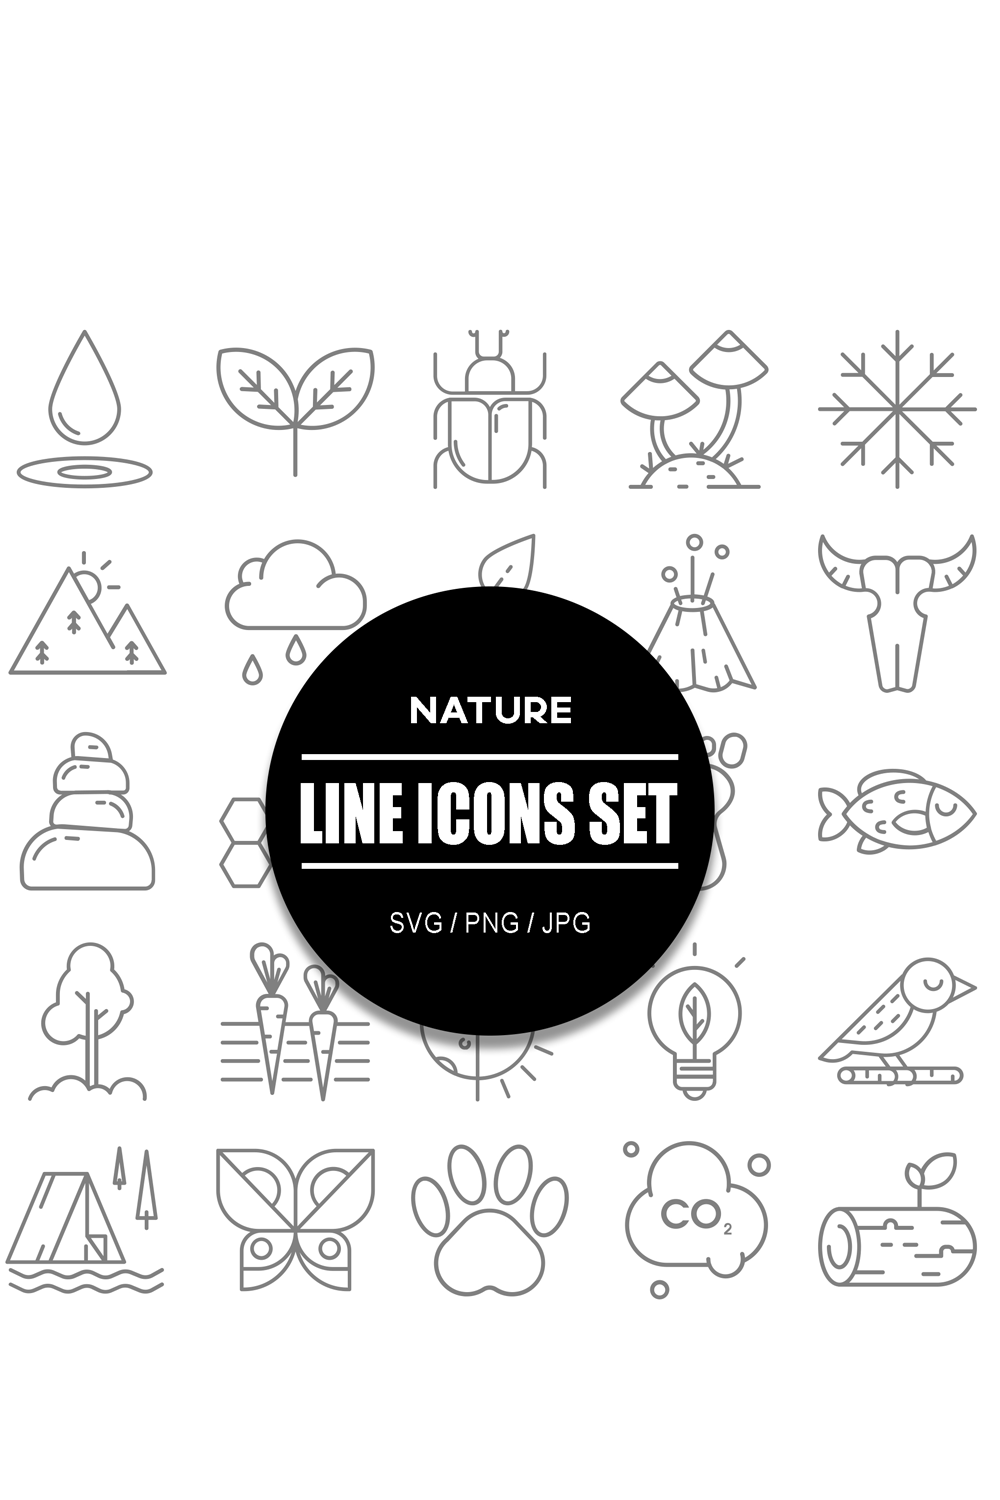 Nature Line Icon Set pinterest preview image.